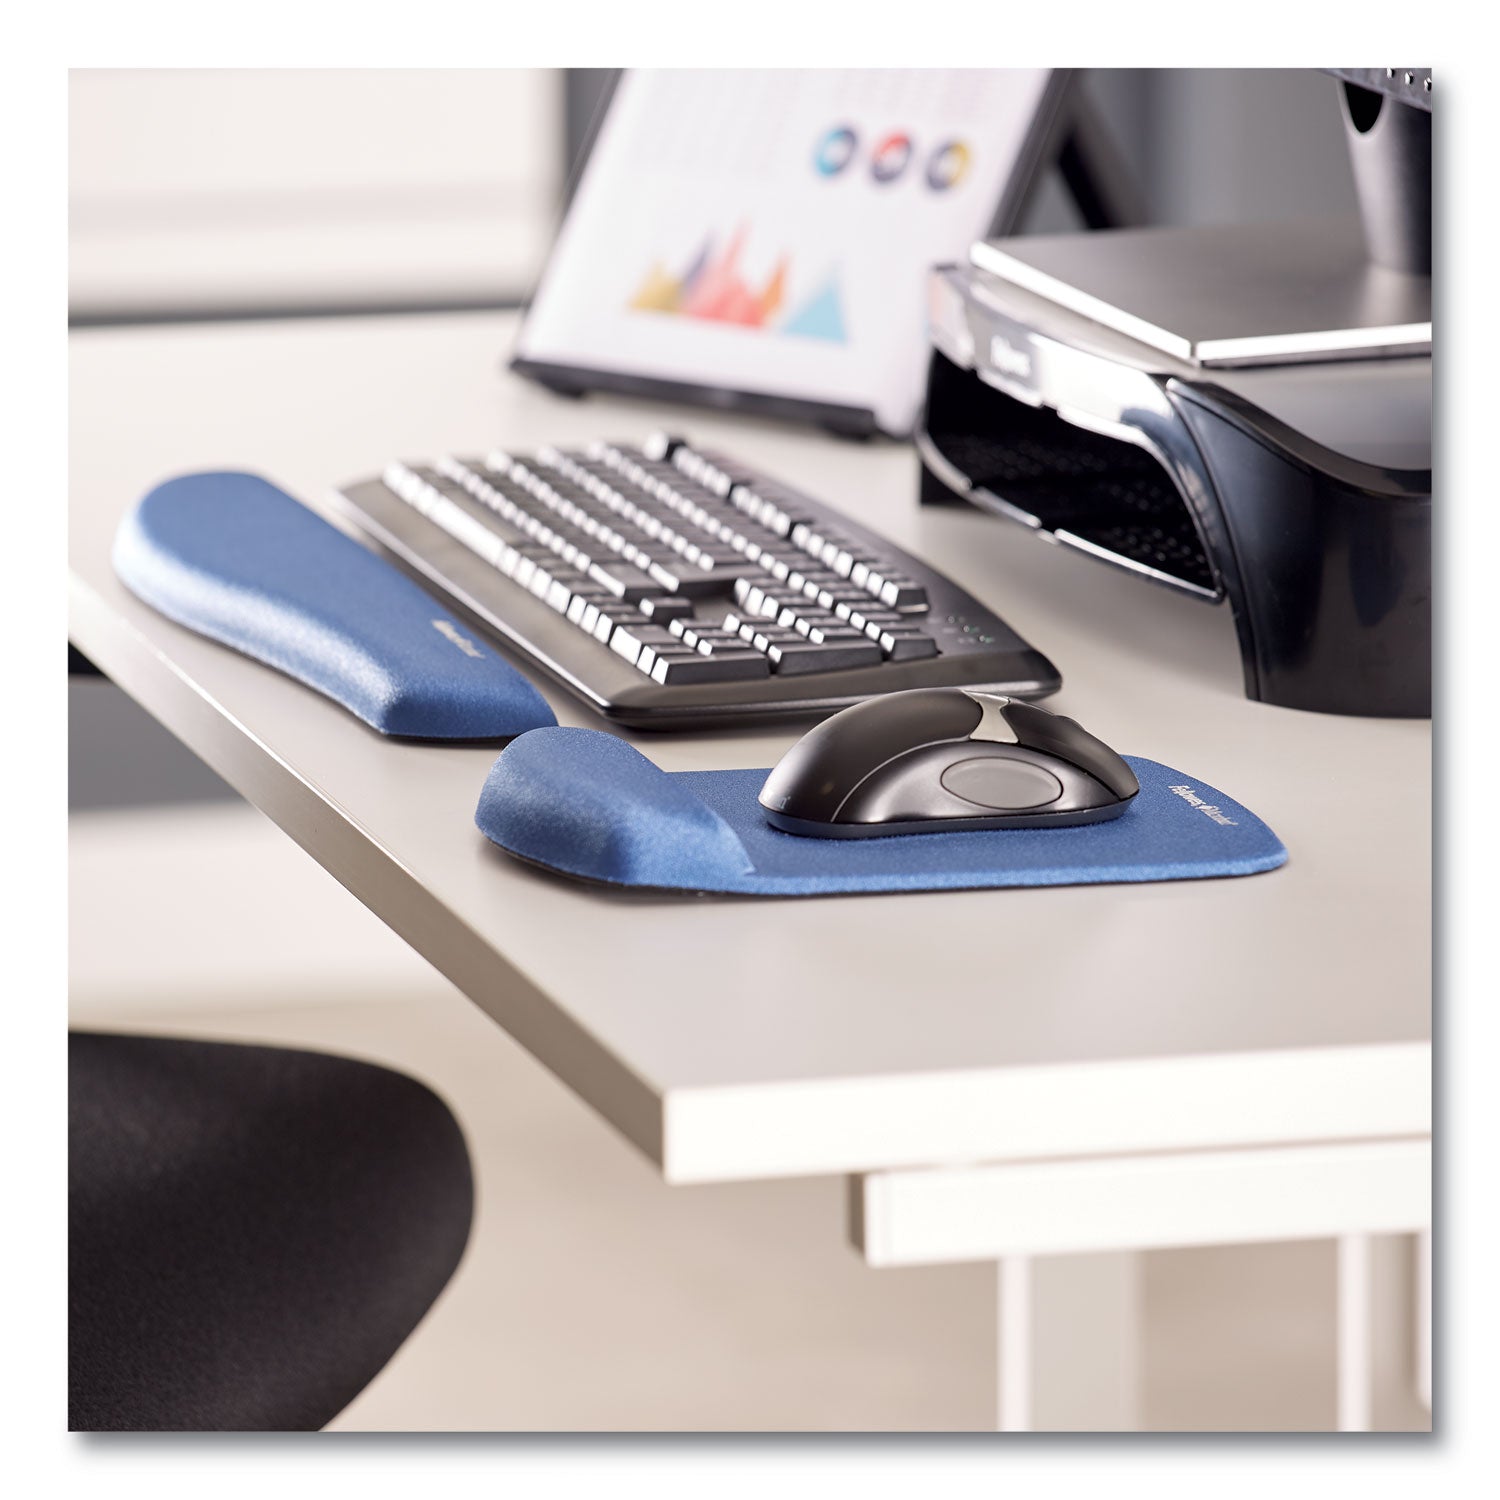 PlushTouch Mouse Pad with Wrist Rest, 7.25 x 9.37, Blue - 